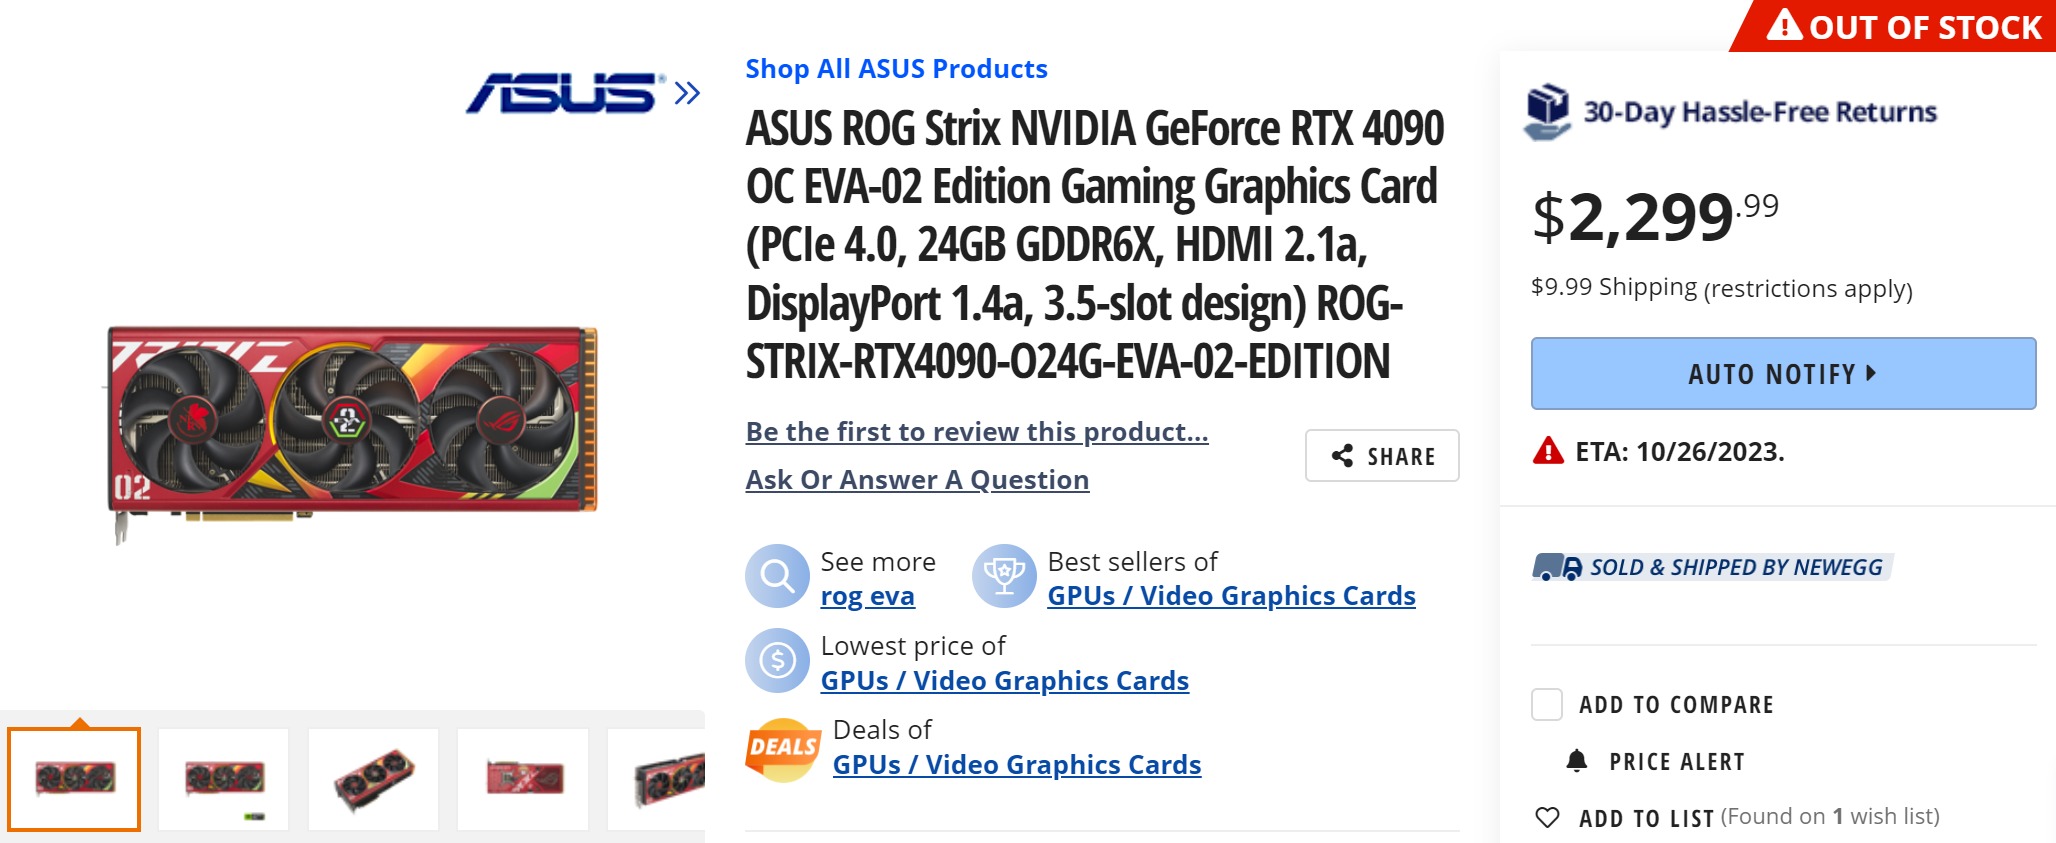 ASUS ROG STRIX NVIDIA GeForce RTX™ 3090 White OC Edition Gaming Graphics  Card (PCIe 4.0, 24GB GDDR6X, HDMI 2.1, DisplayPort 1.4a, White color  scheme